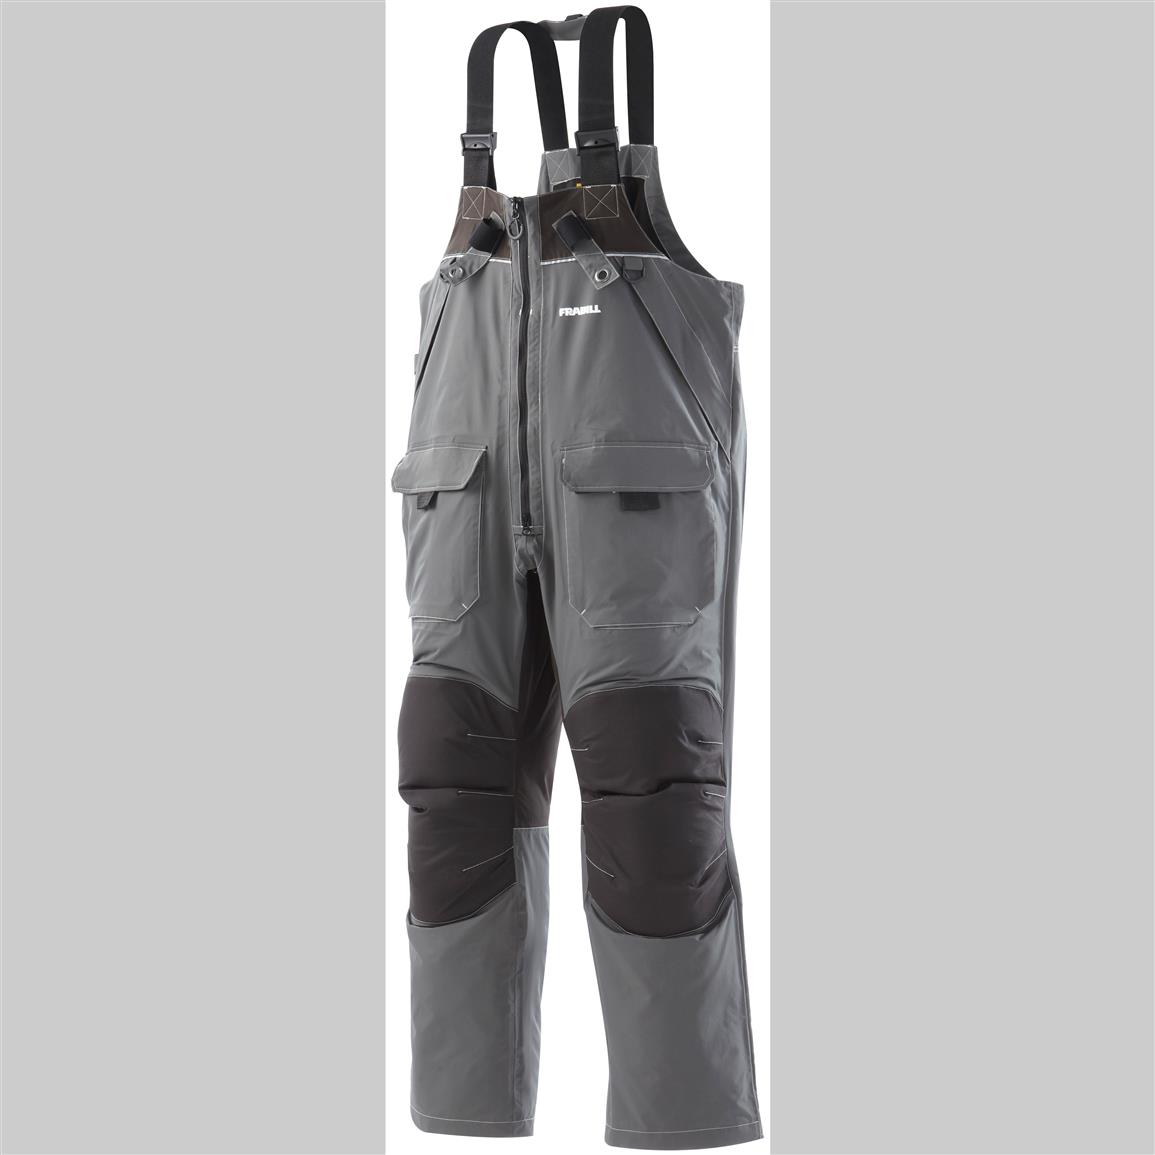 Frabill I2 Waterproof Bibs 622867, Ice Fishing Clothing